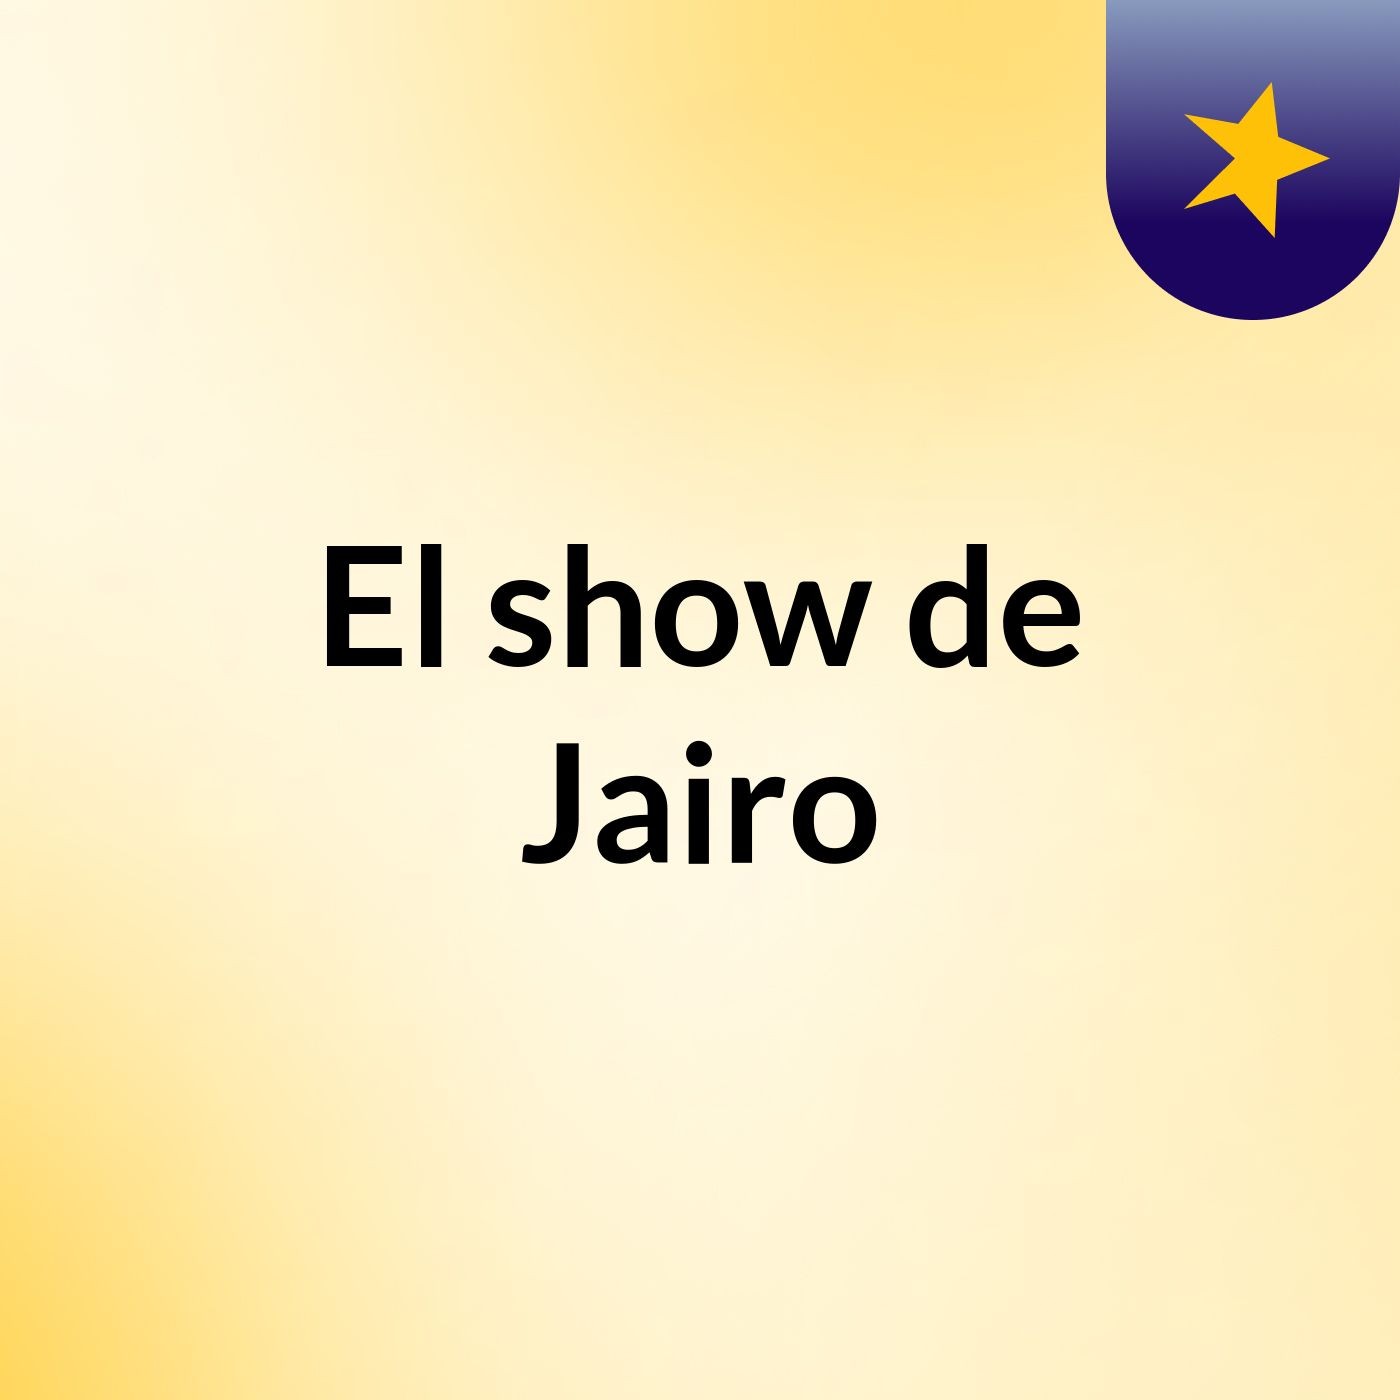 El show de Jairo